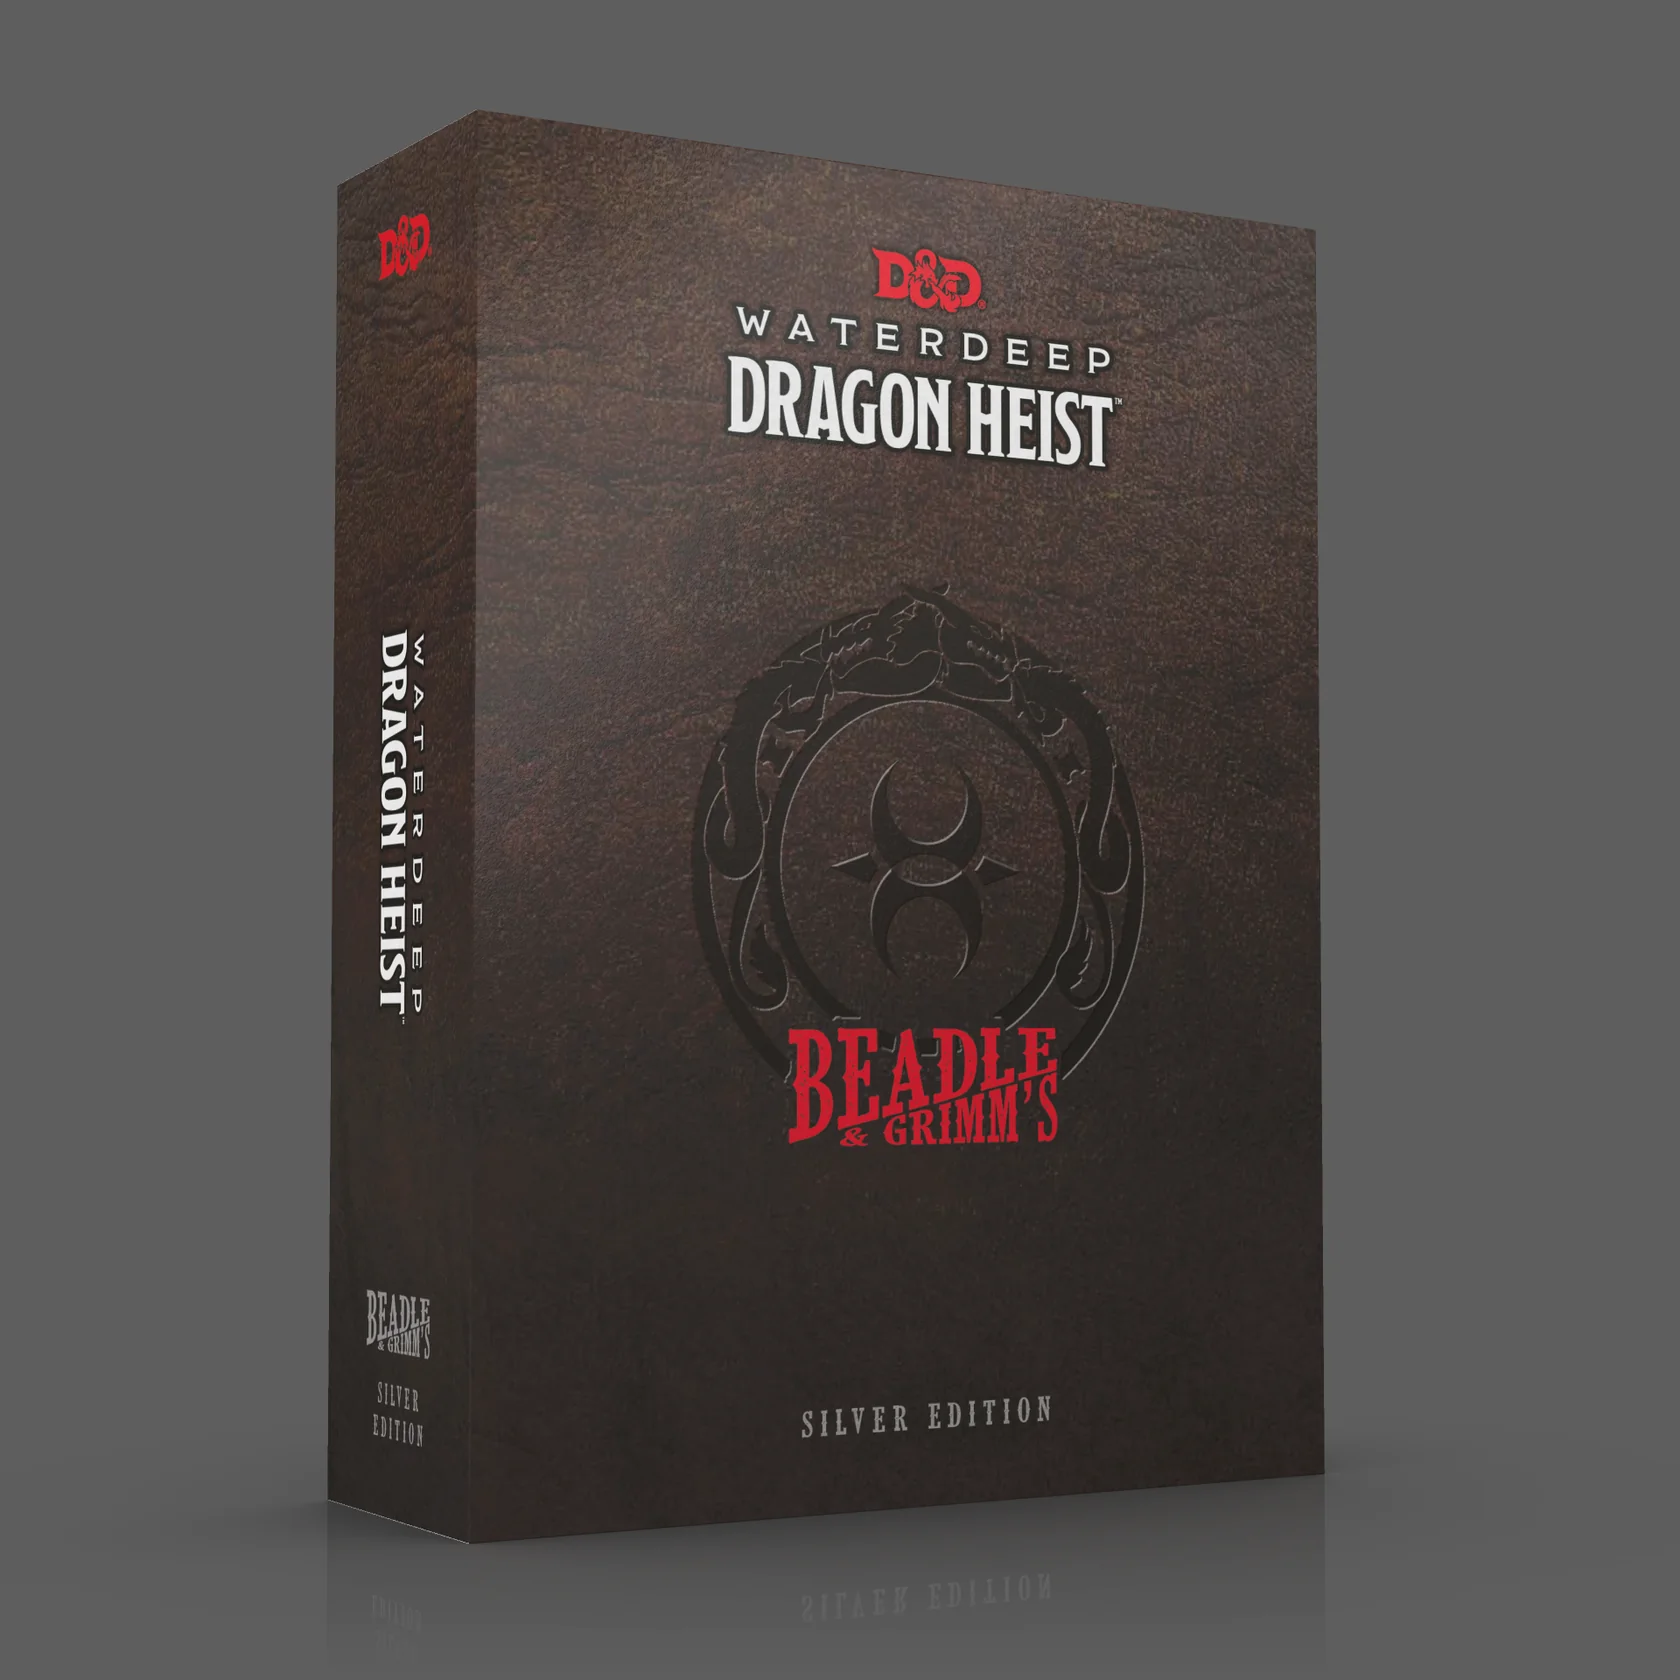 Waterdeep: Dragon Heist Silver Edition box